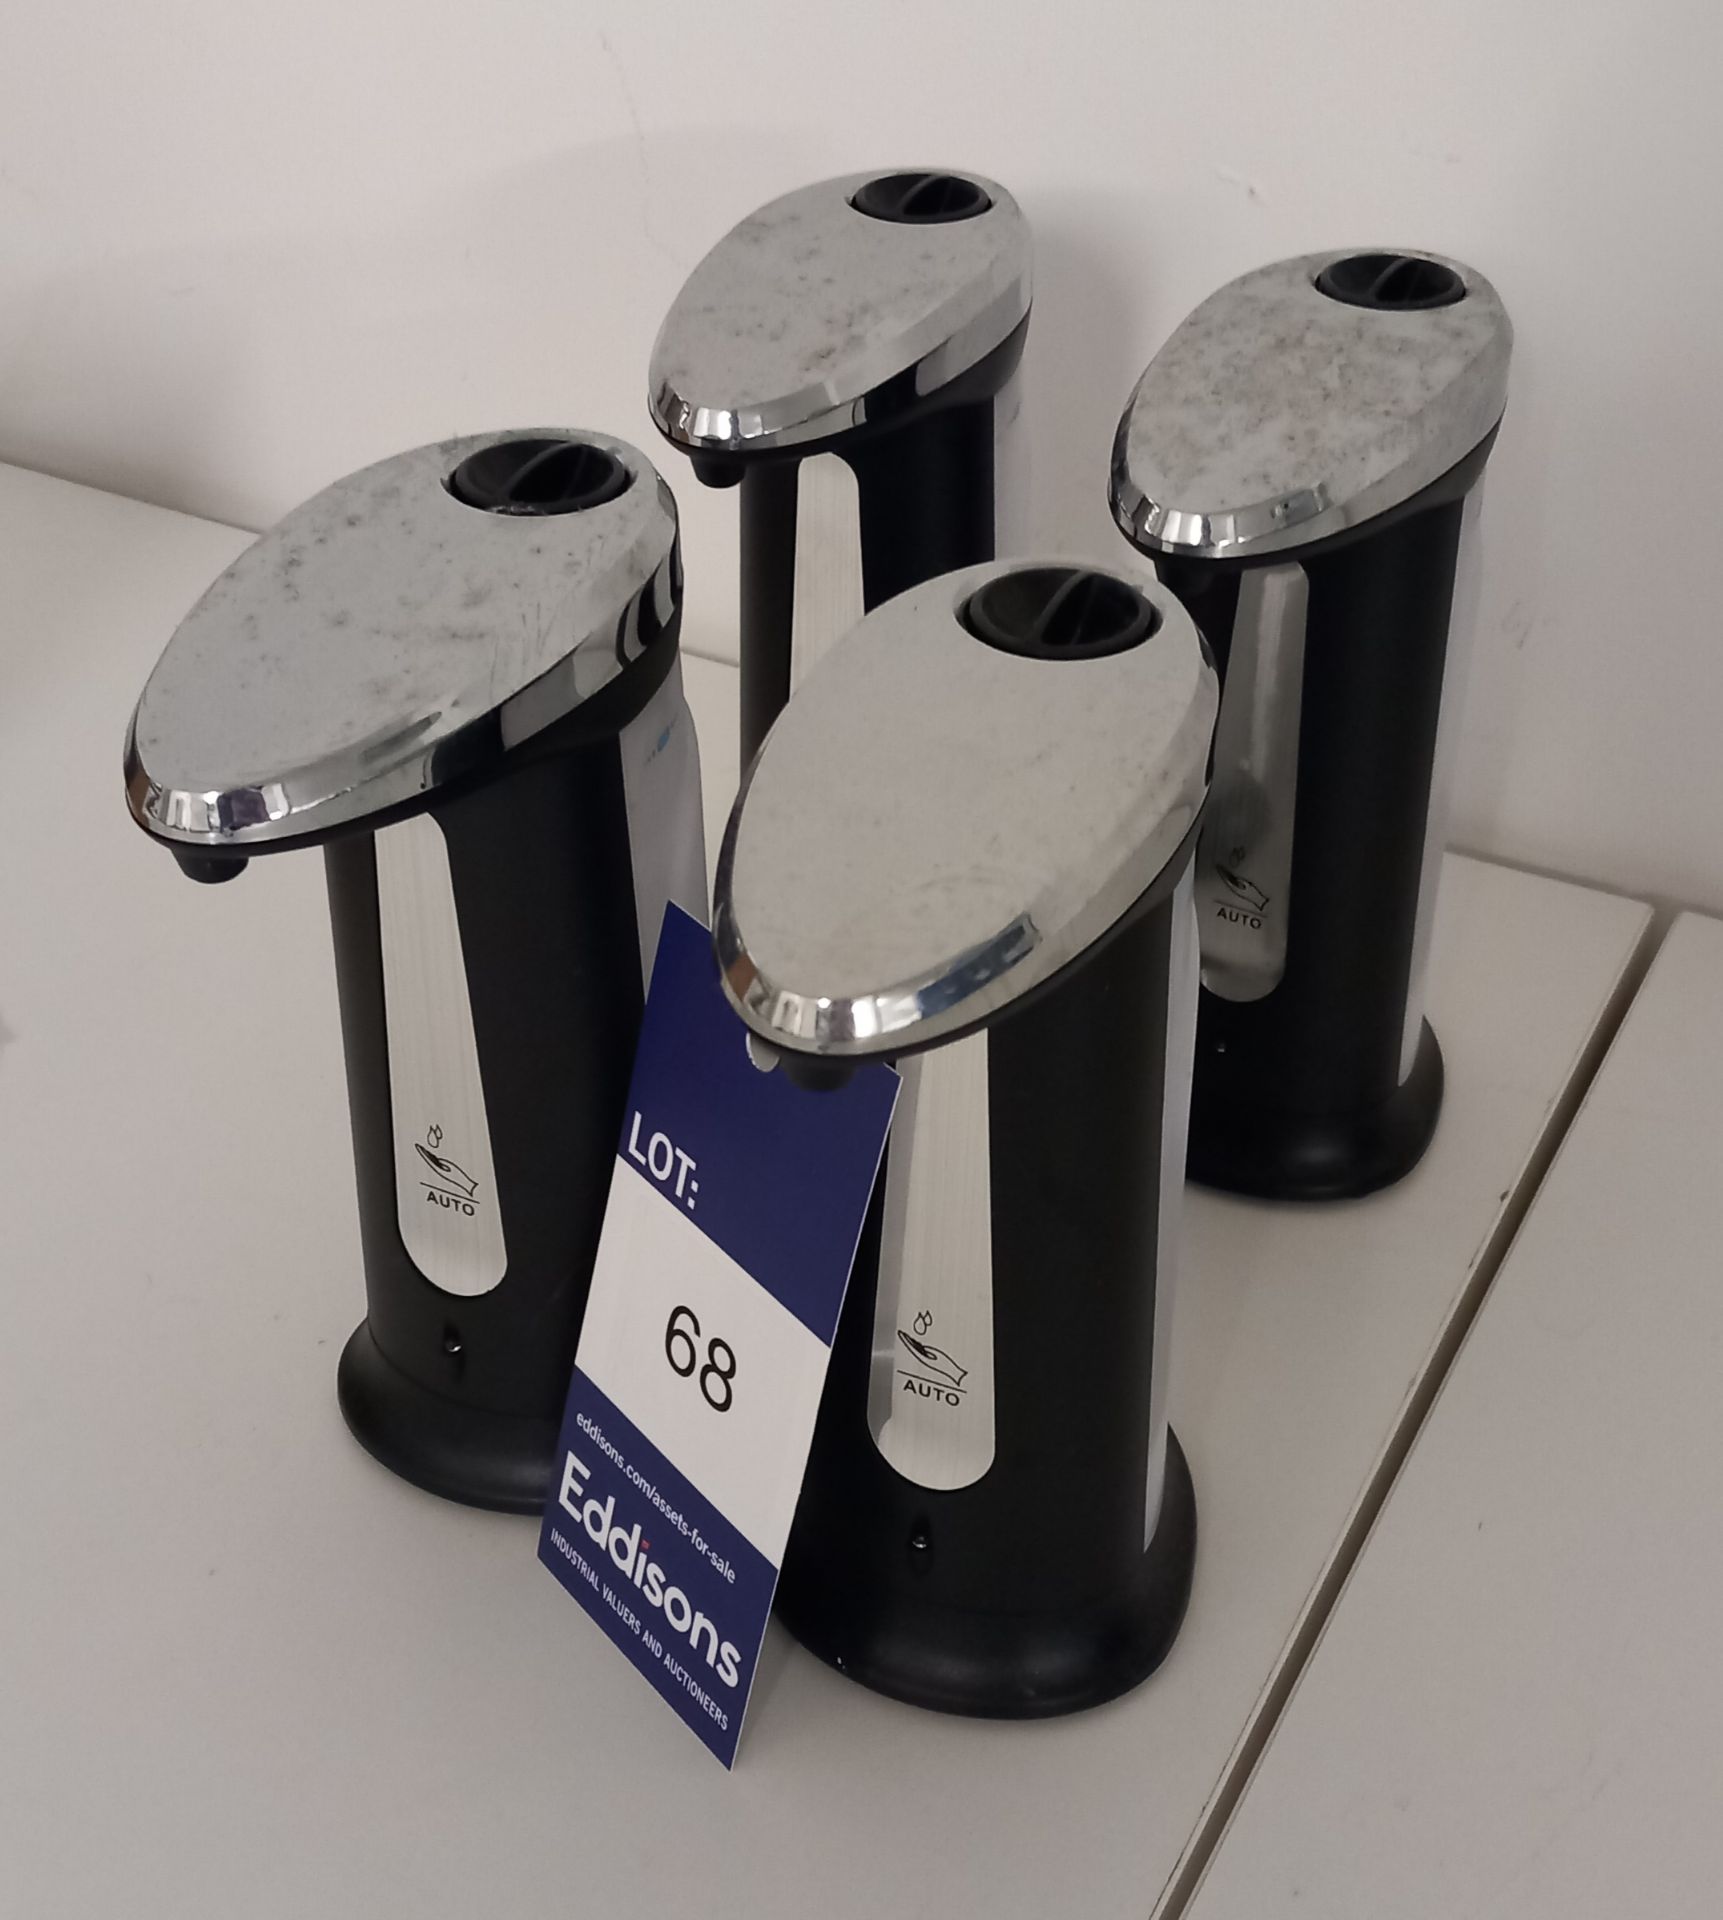 4 x Automatic Hand Sanitiser Dispensers